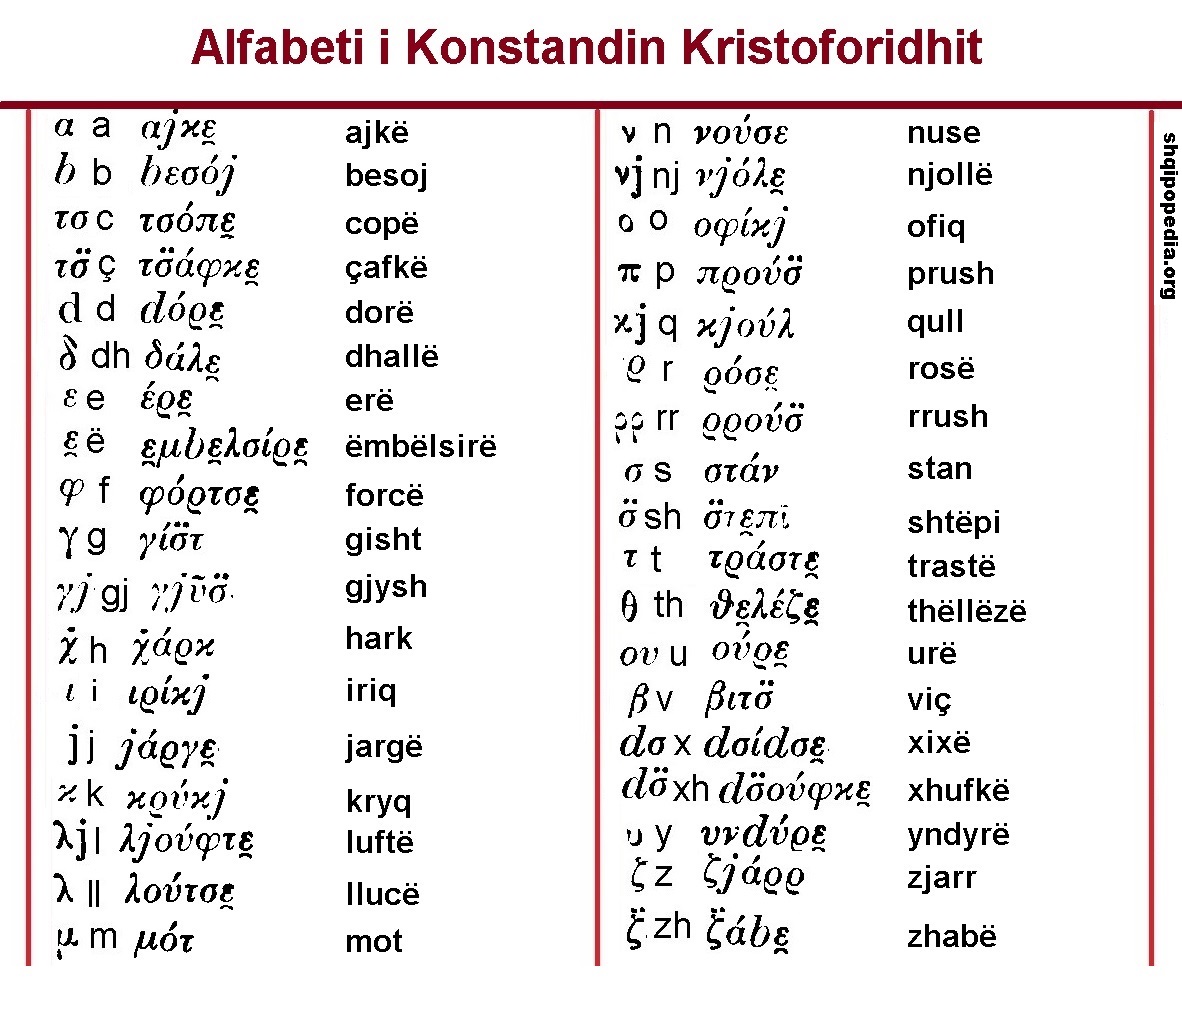 alfabeti-shqip-i-konstandin-kristoforidhit.jpg